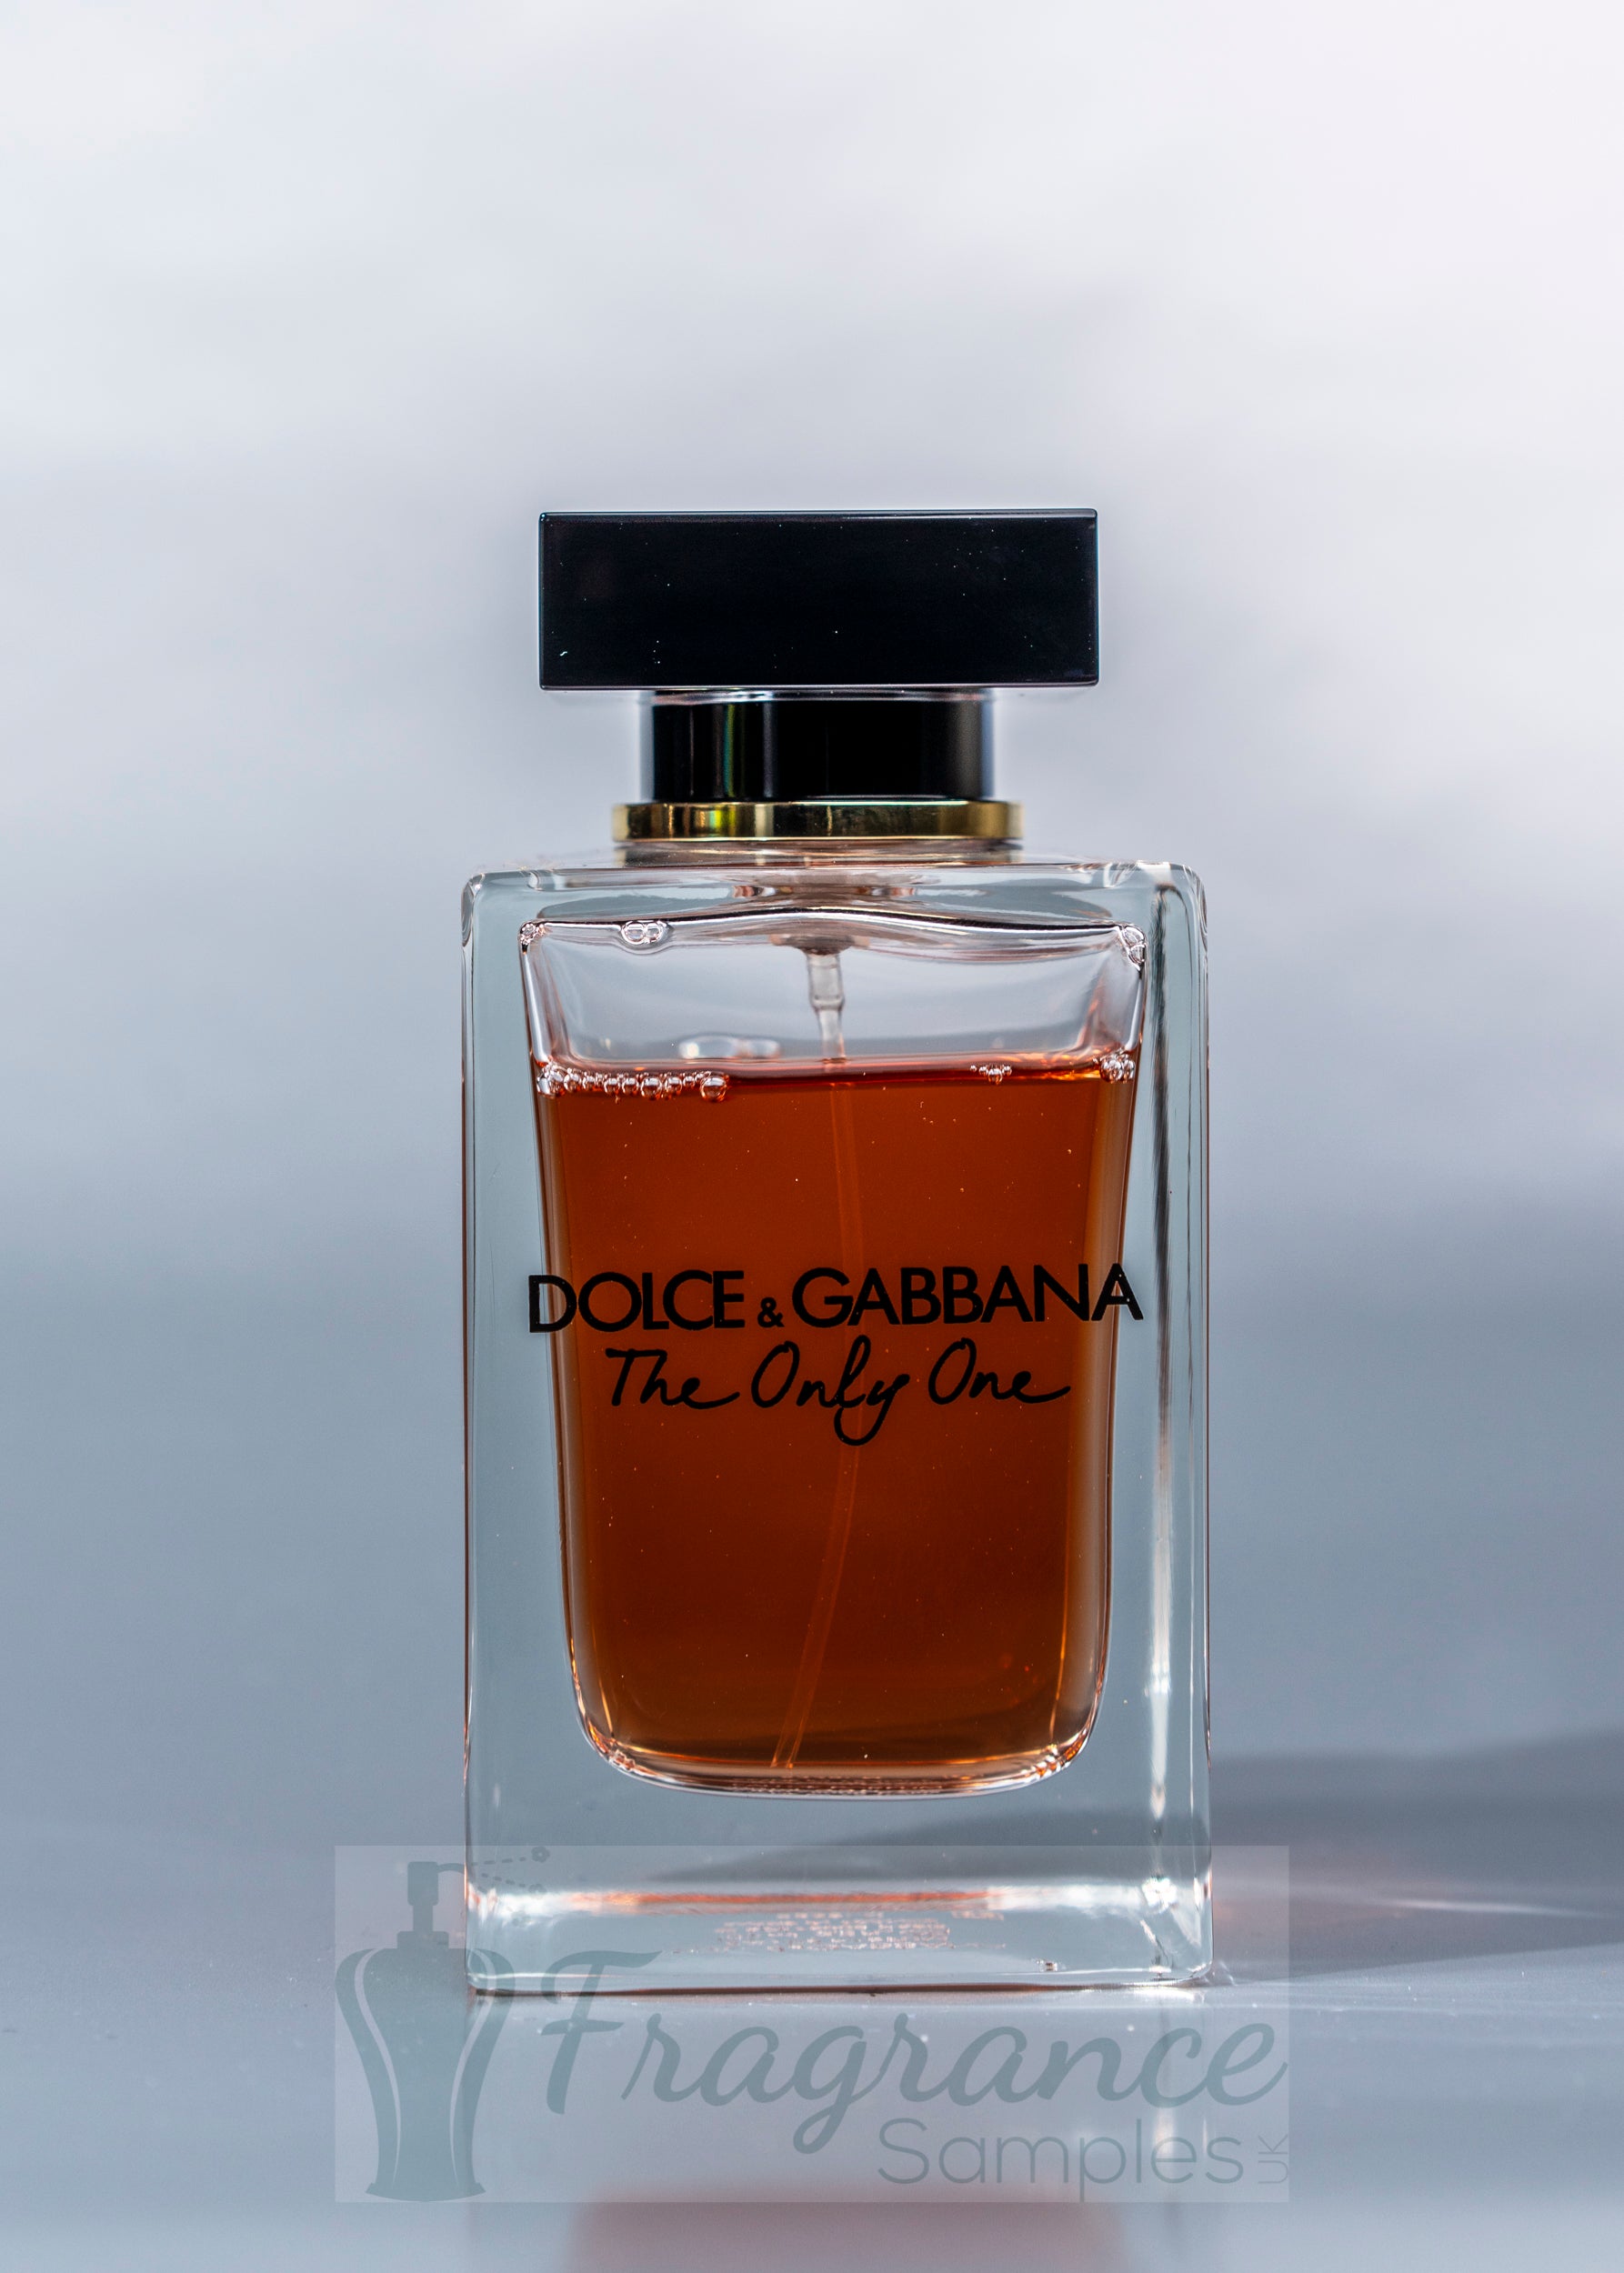 Dolce & Gabbana The Only One For Women – Fragrance Samples UK